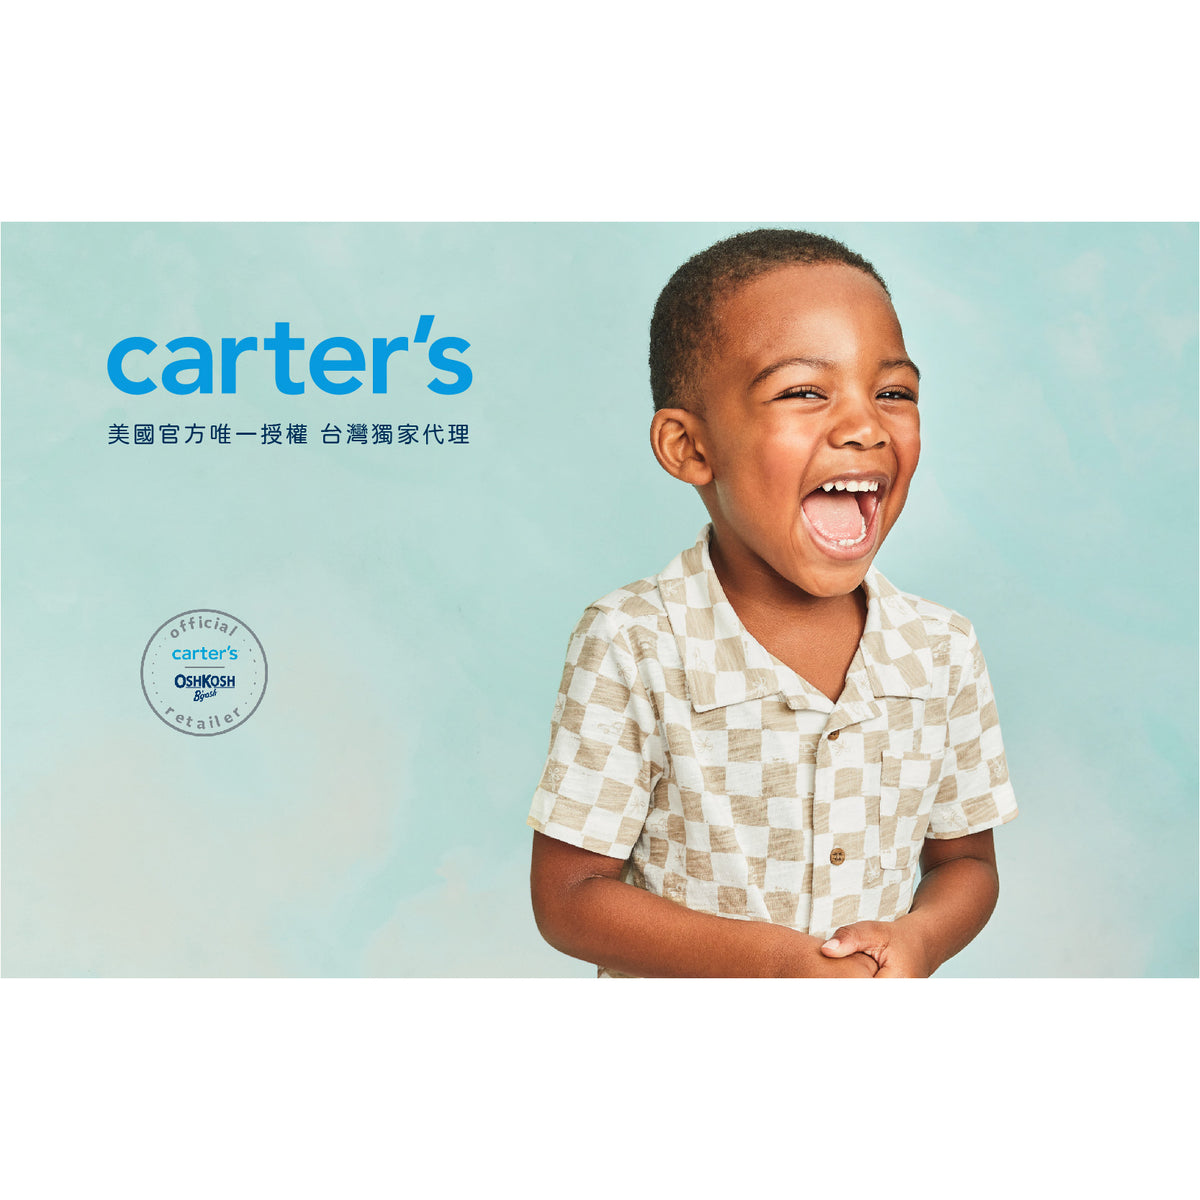 Carter's 格紋襯衫2件組套裝(2T-5T)